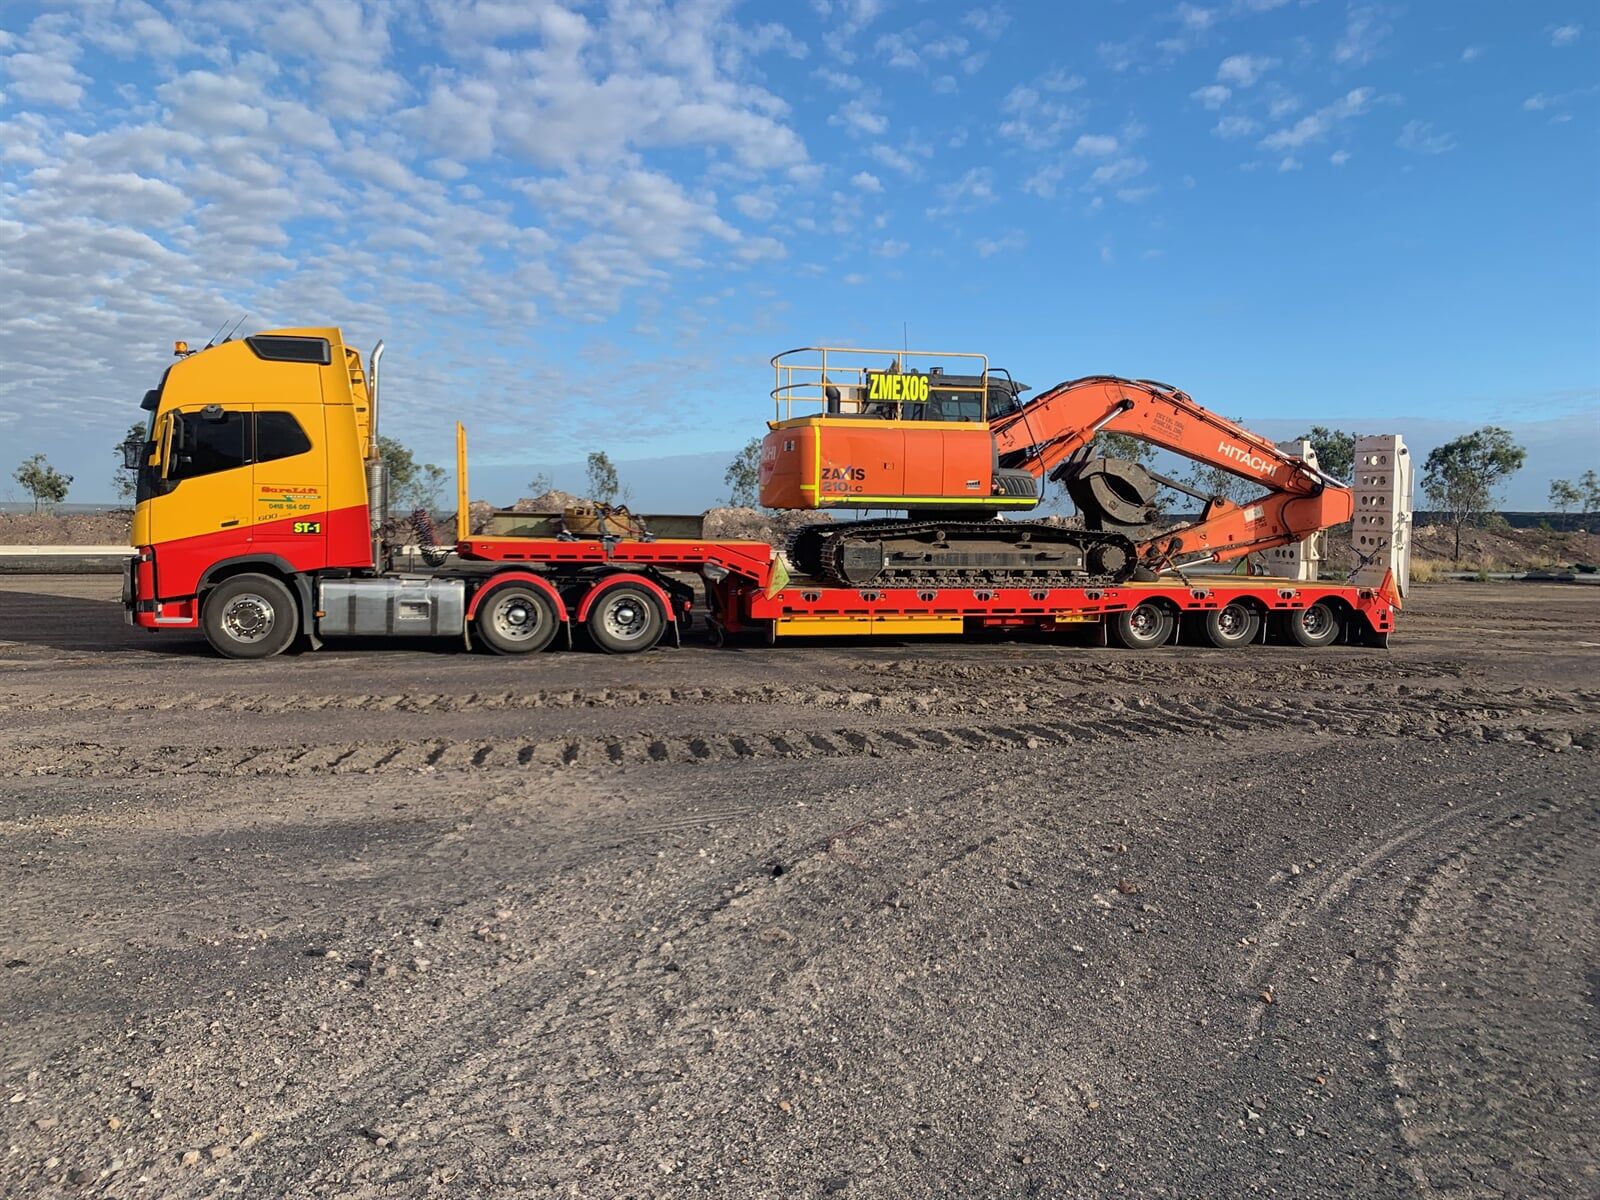 Crane Truck Loaded With Heavy Equipment — Crane Hire & Transport in Moranbah, QLD